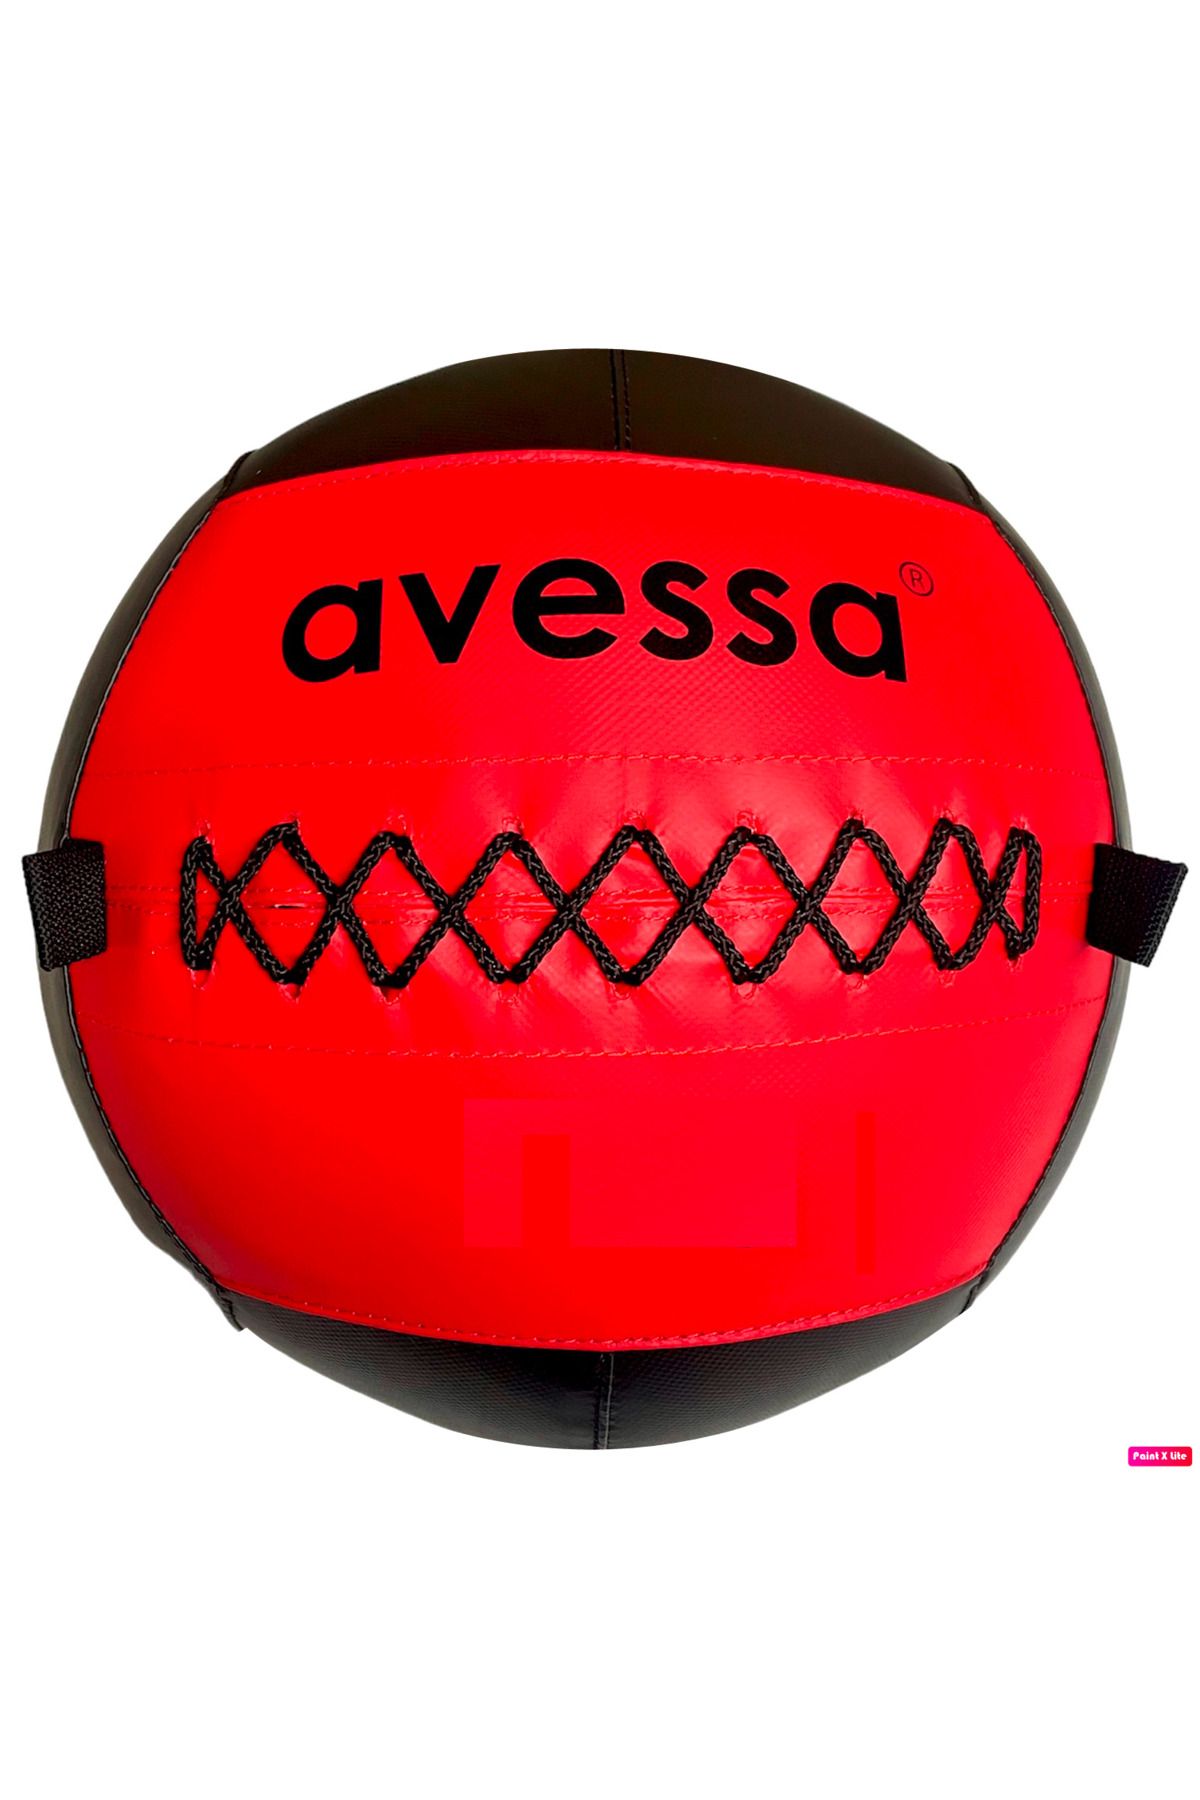 Avessa DST Crossfit Deri Ekstra Güçlendirilmiş Dikişli Yapı Sağlık Topu Fitness Egzersiz Duvar Topu